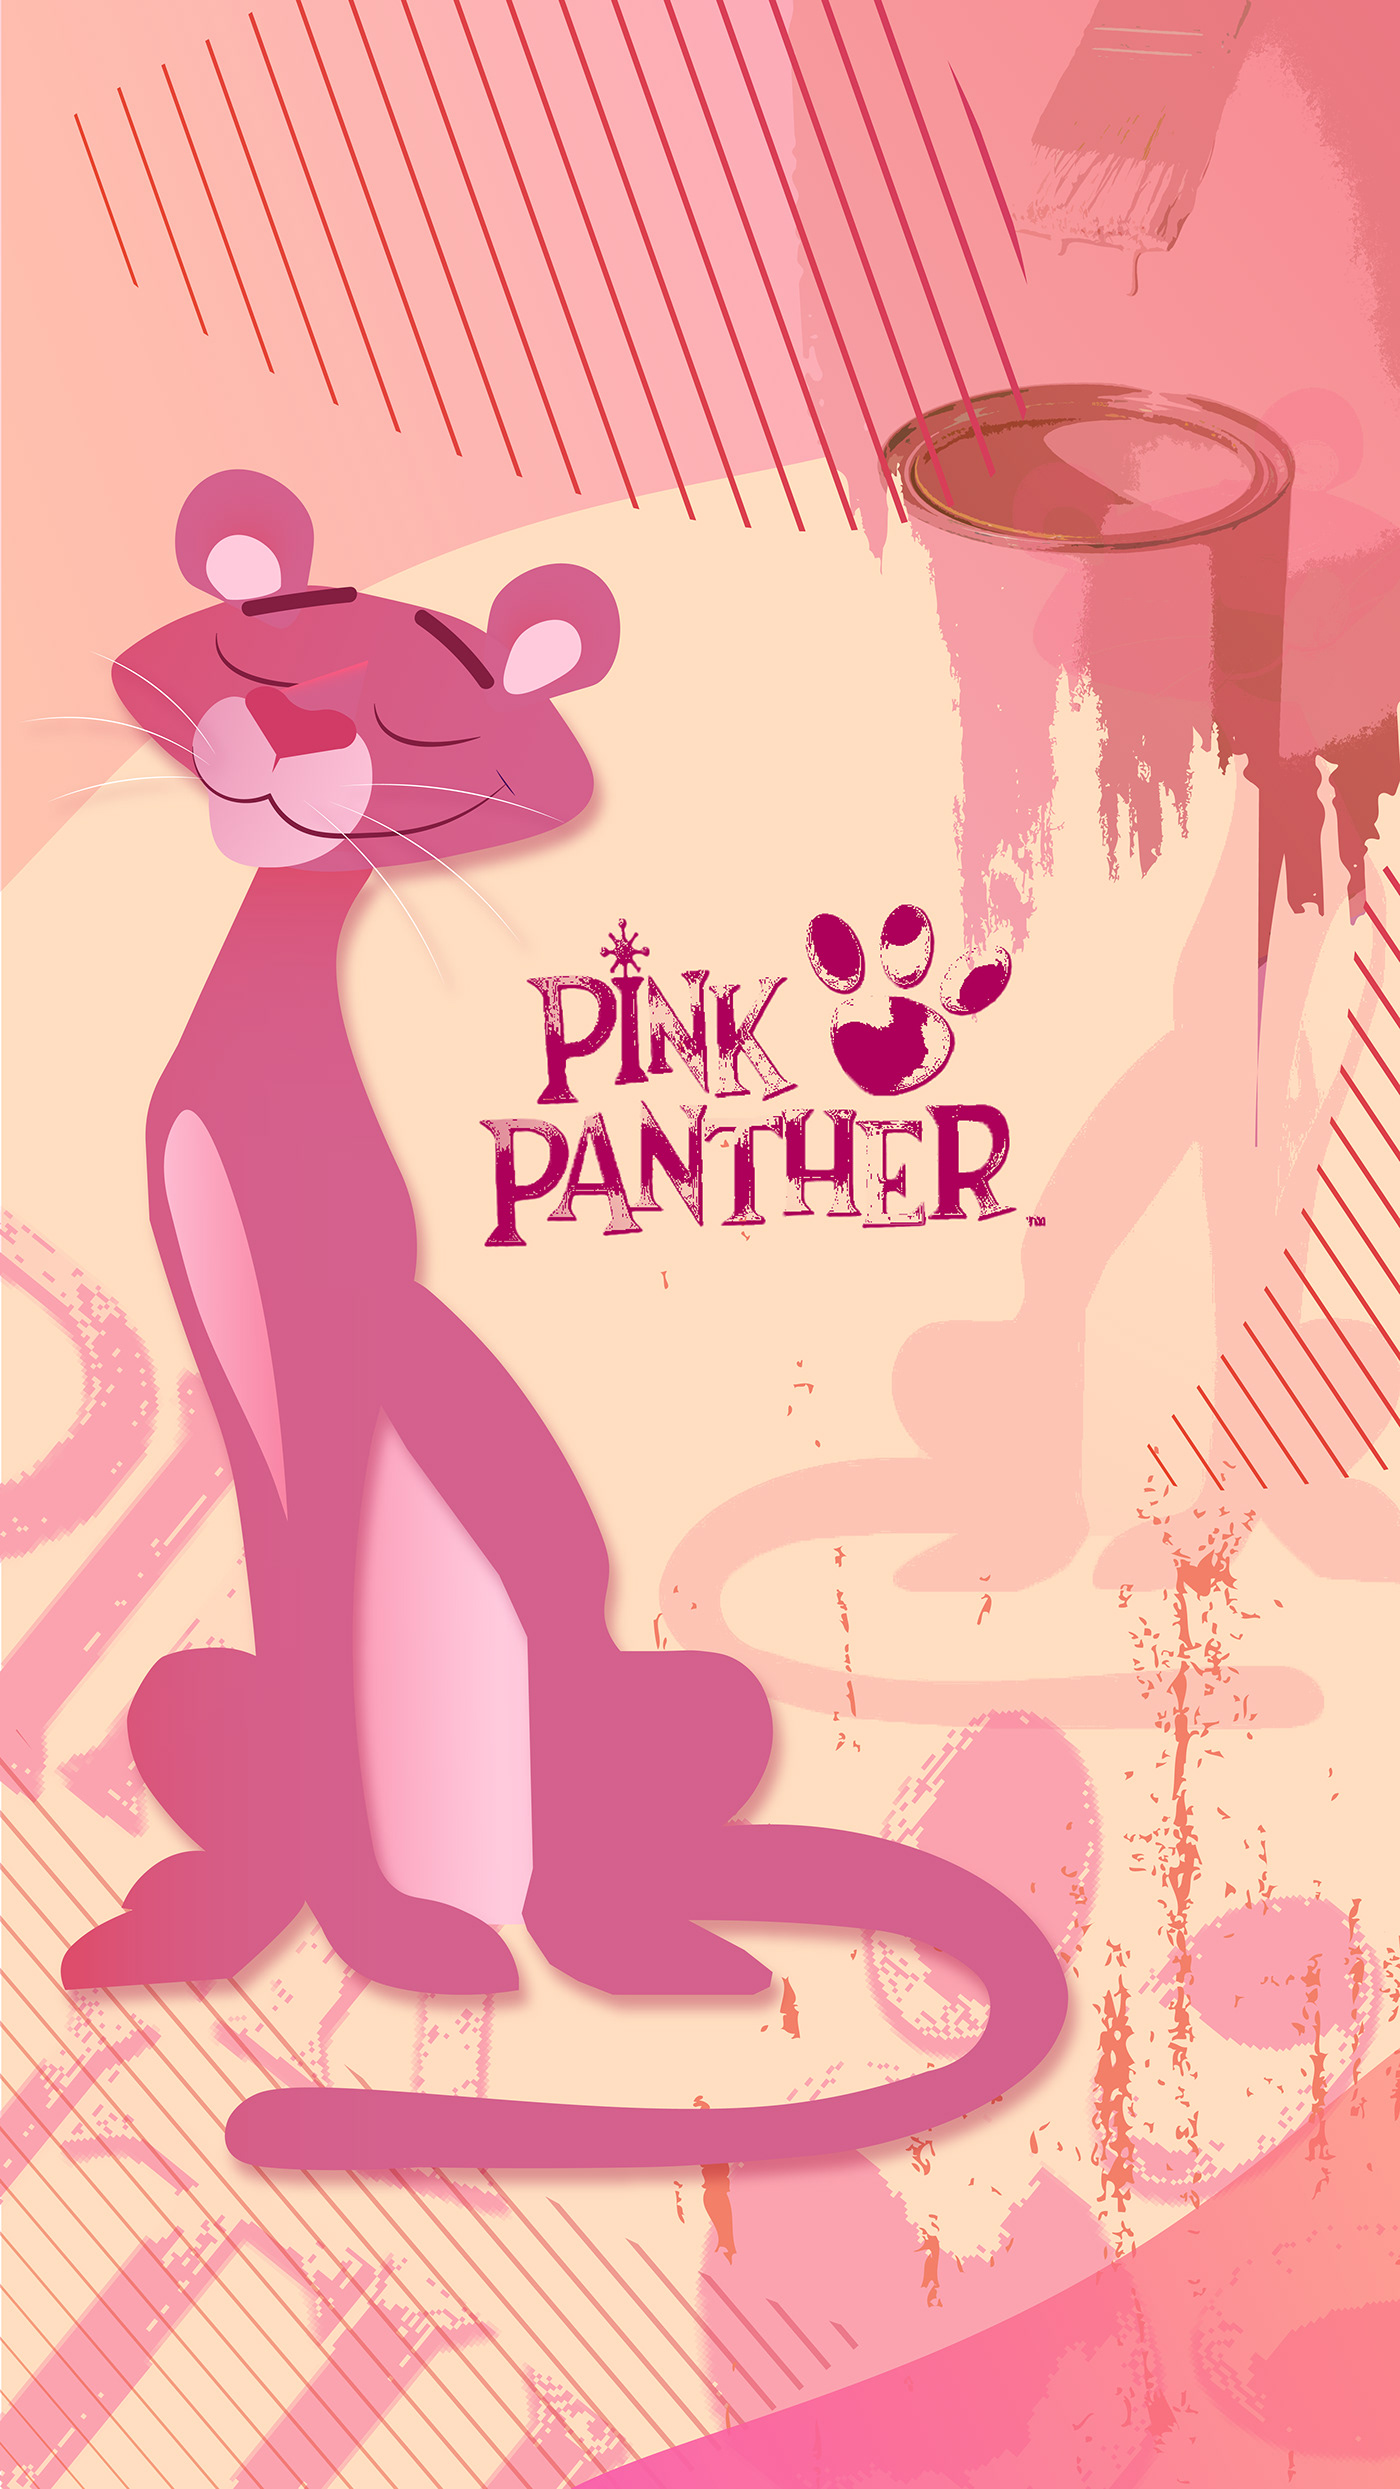 Pink Panther Digital Art  vector artwork Poster Tribute